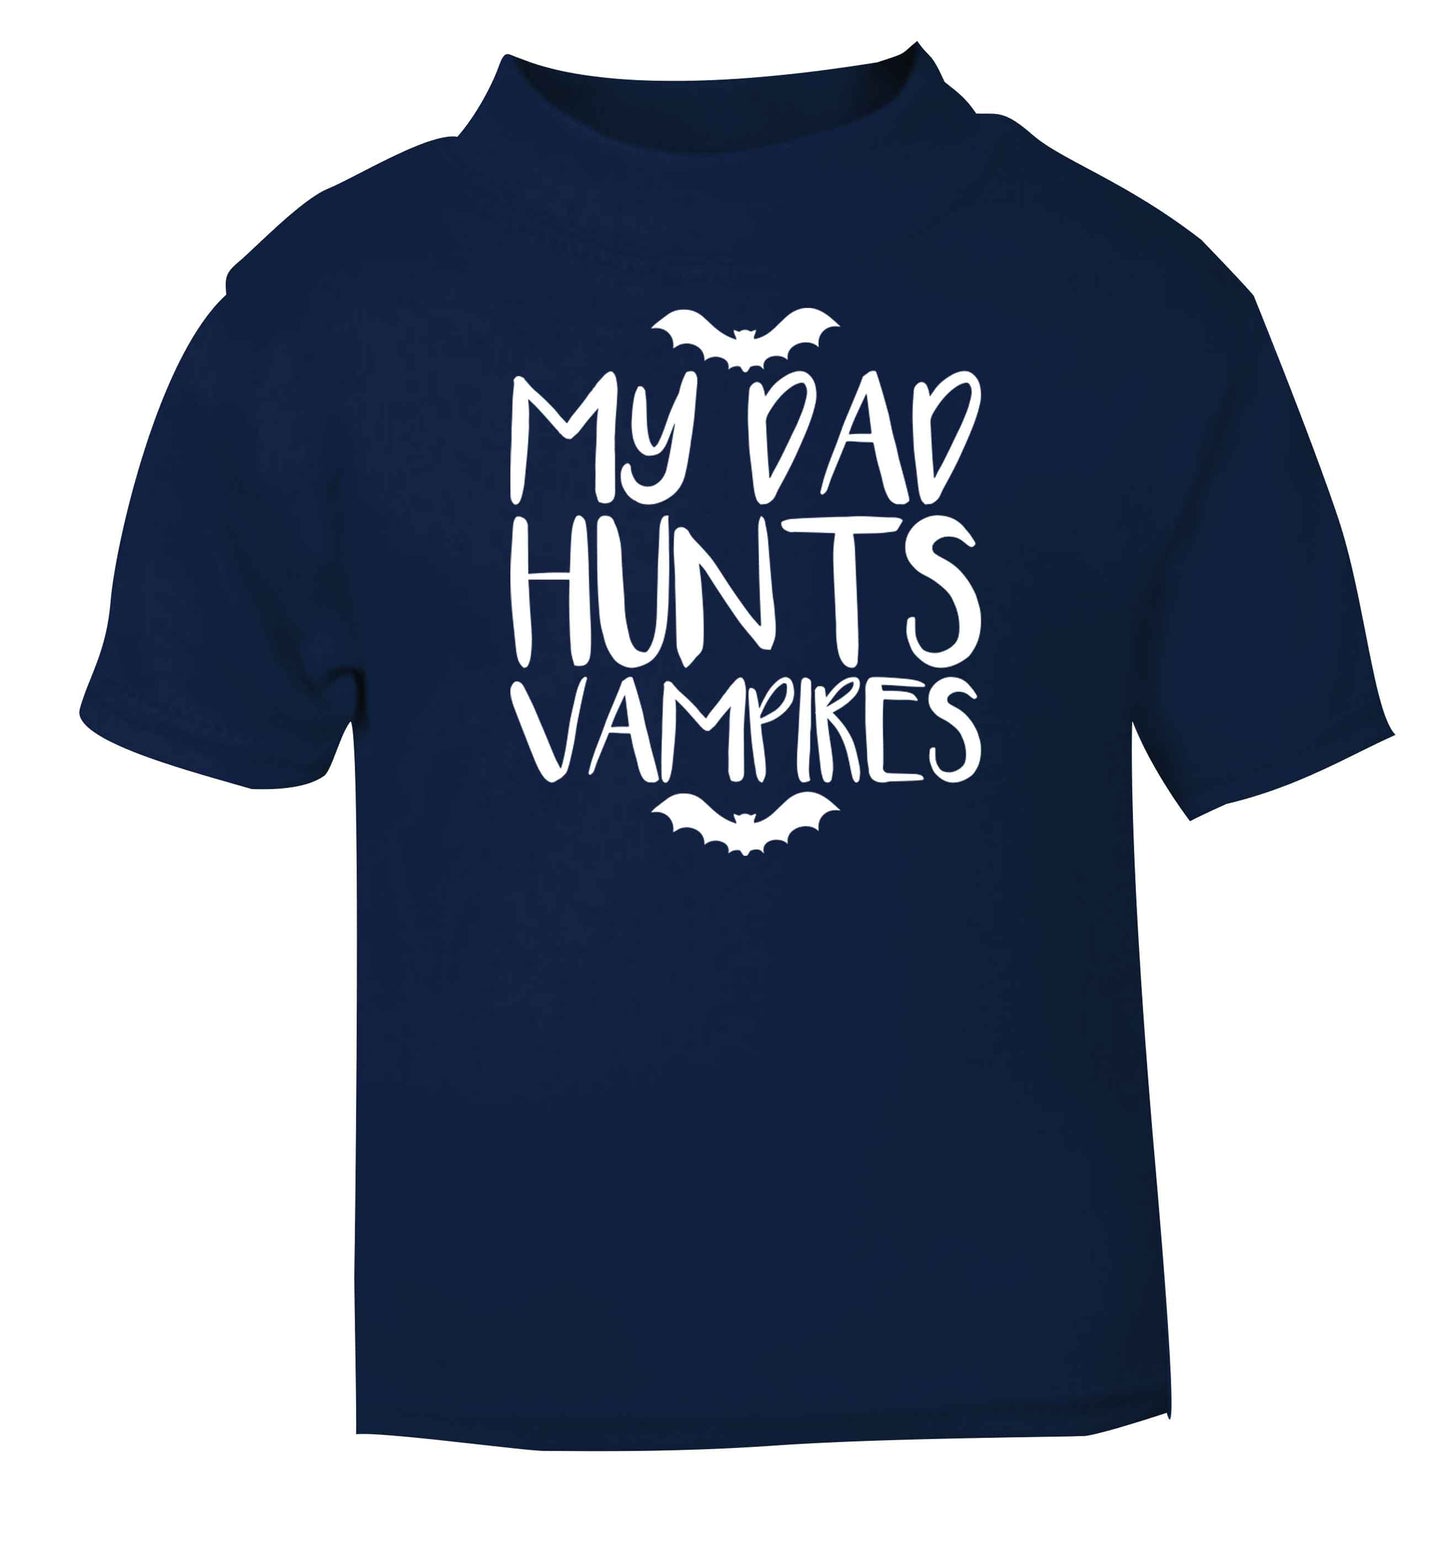 My dad hunts vampires navy baby toddler Tshirt 2 Years